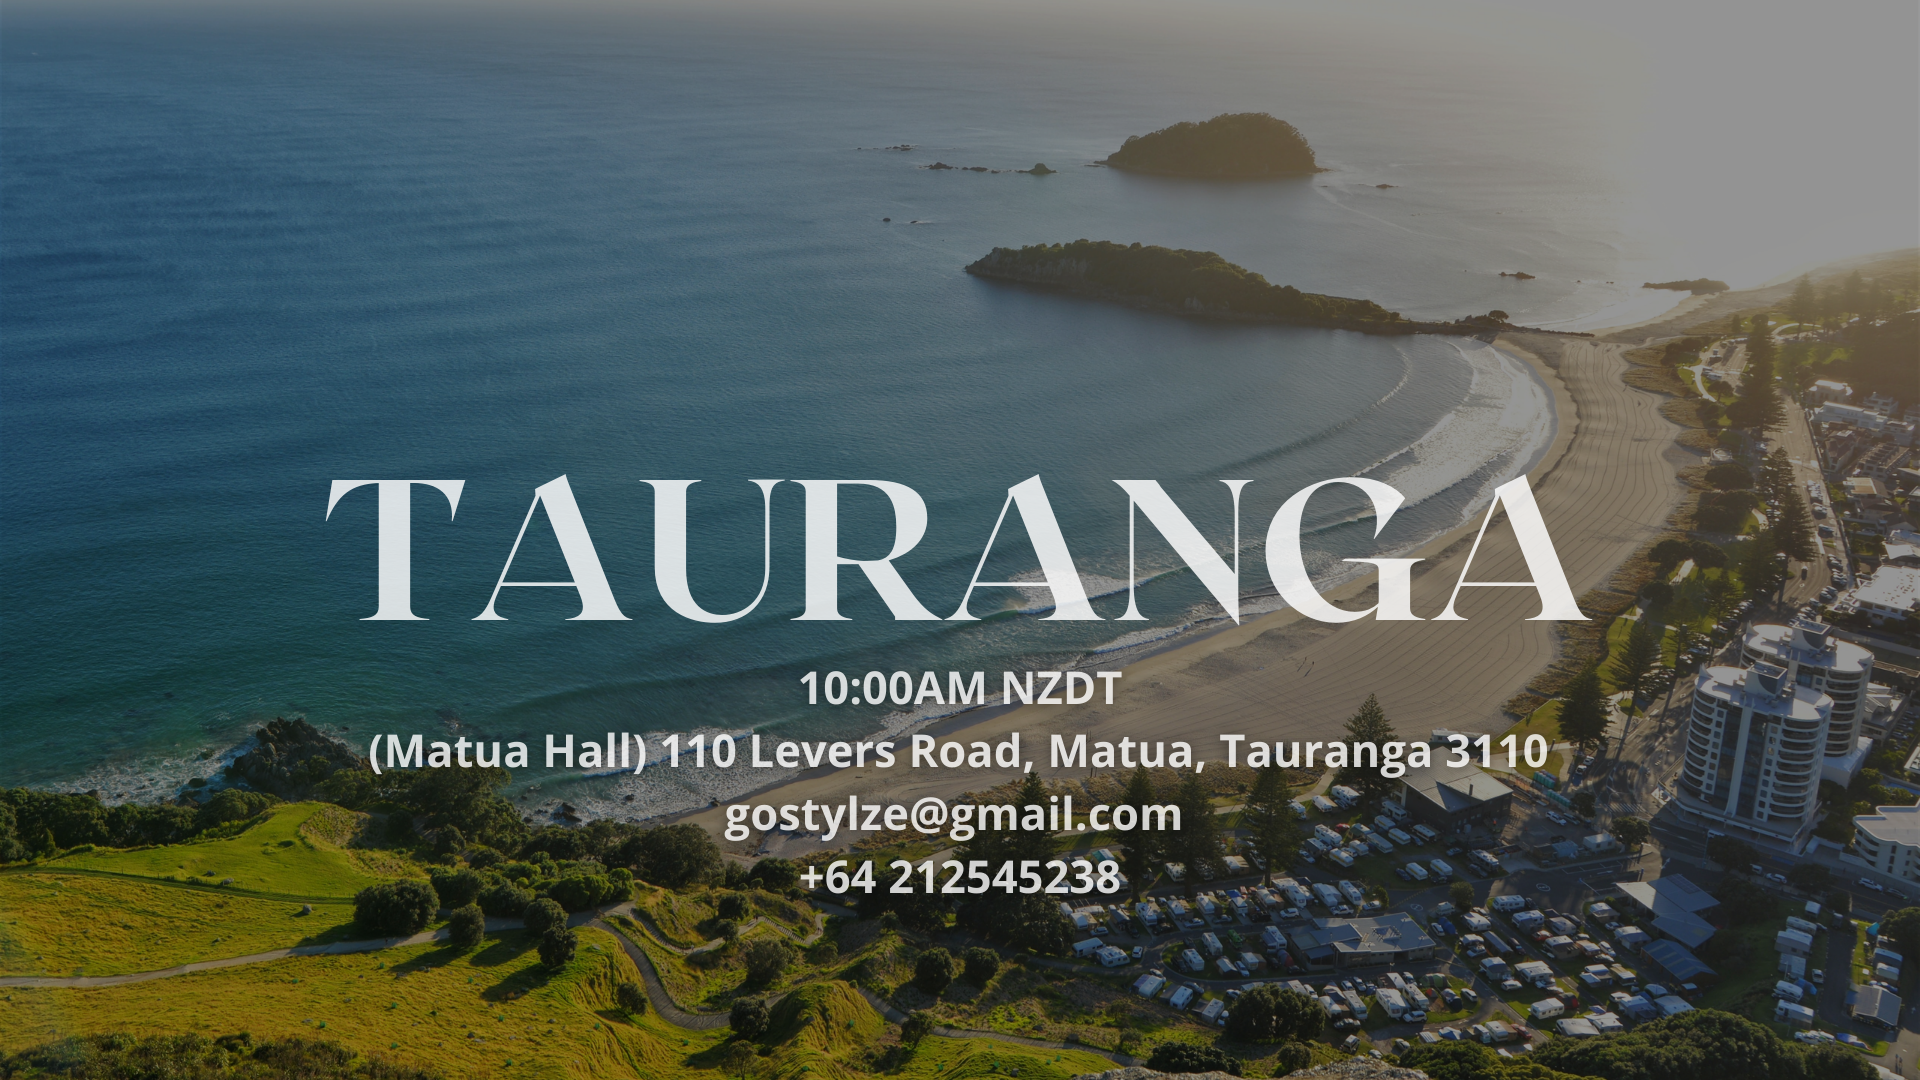 Tauranga Church image